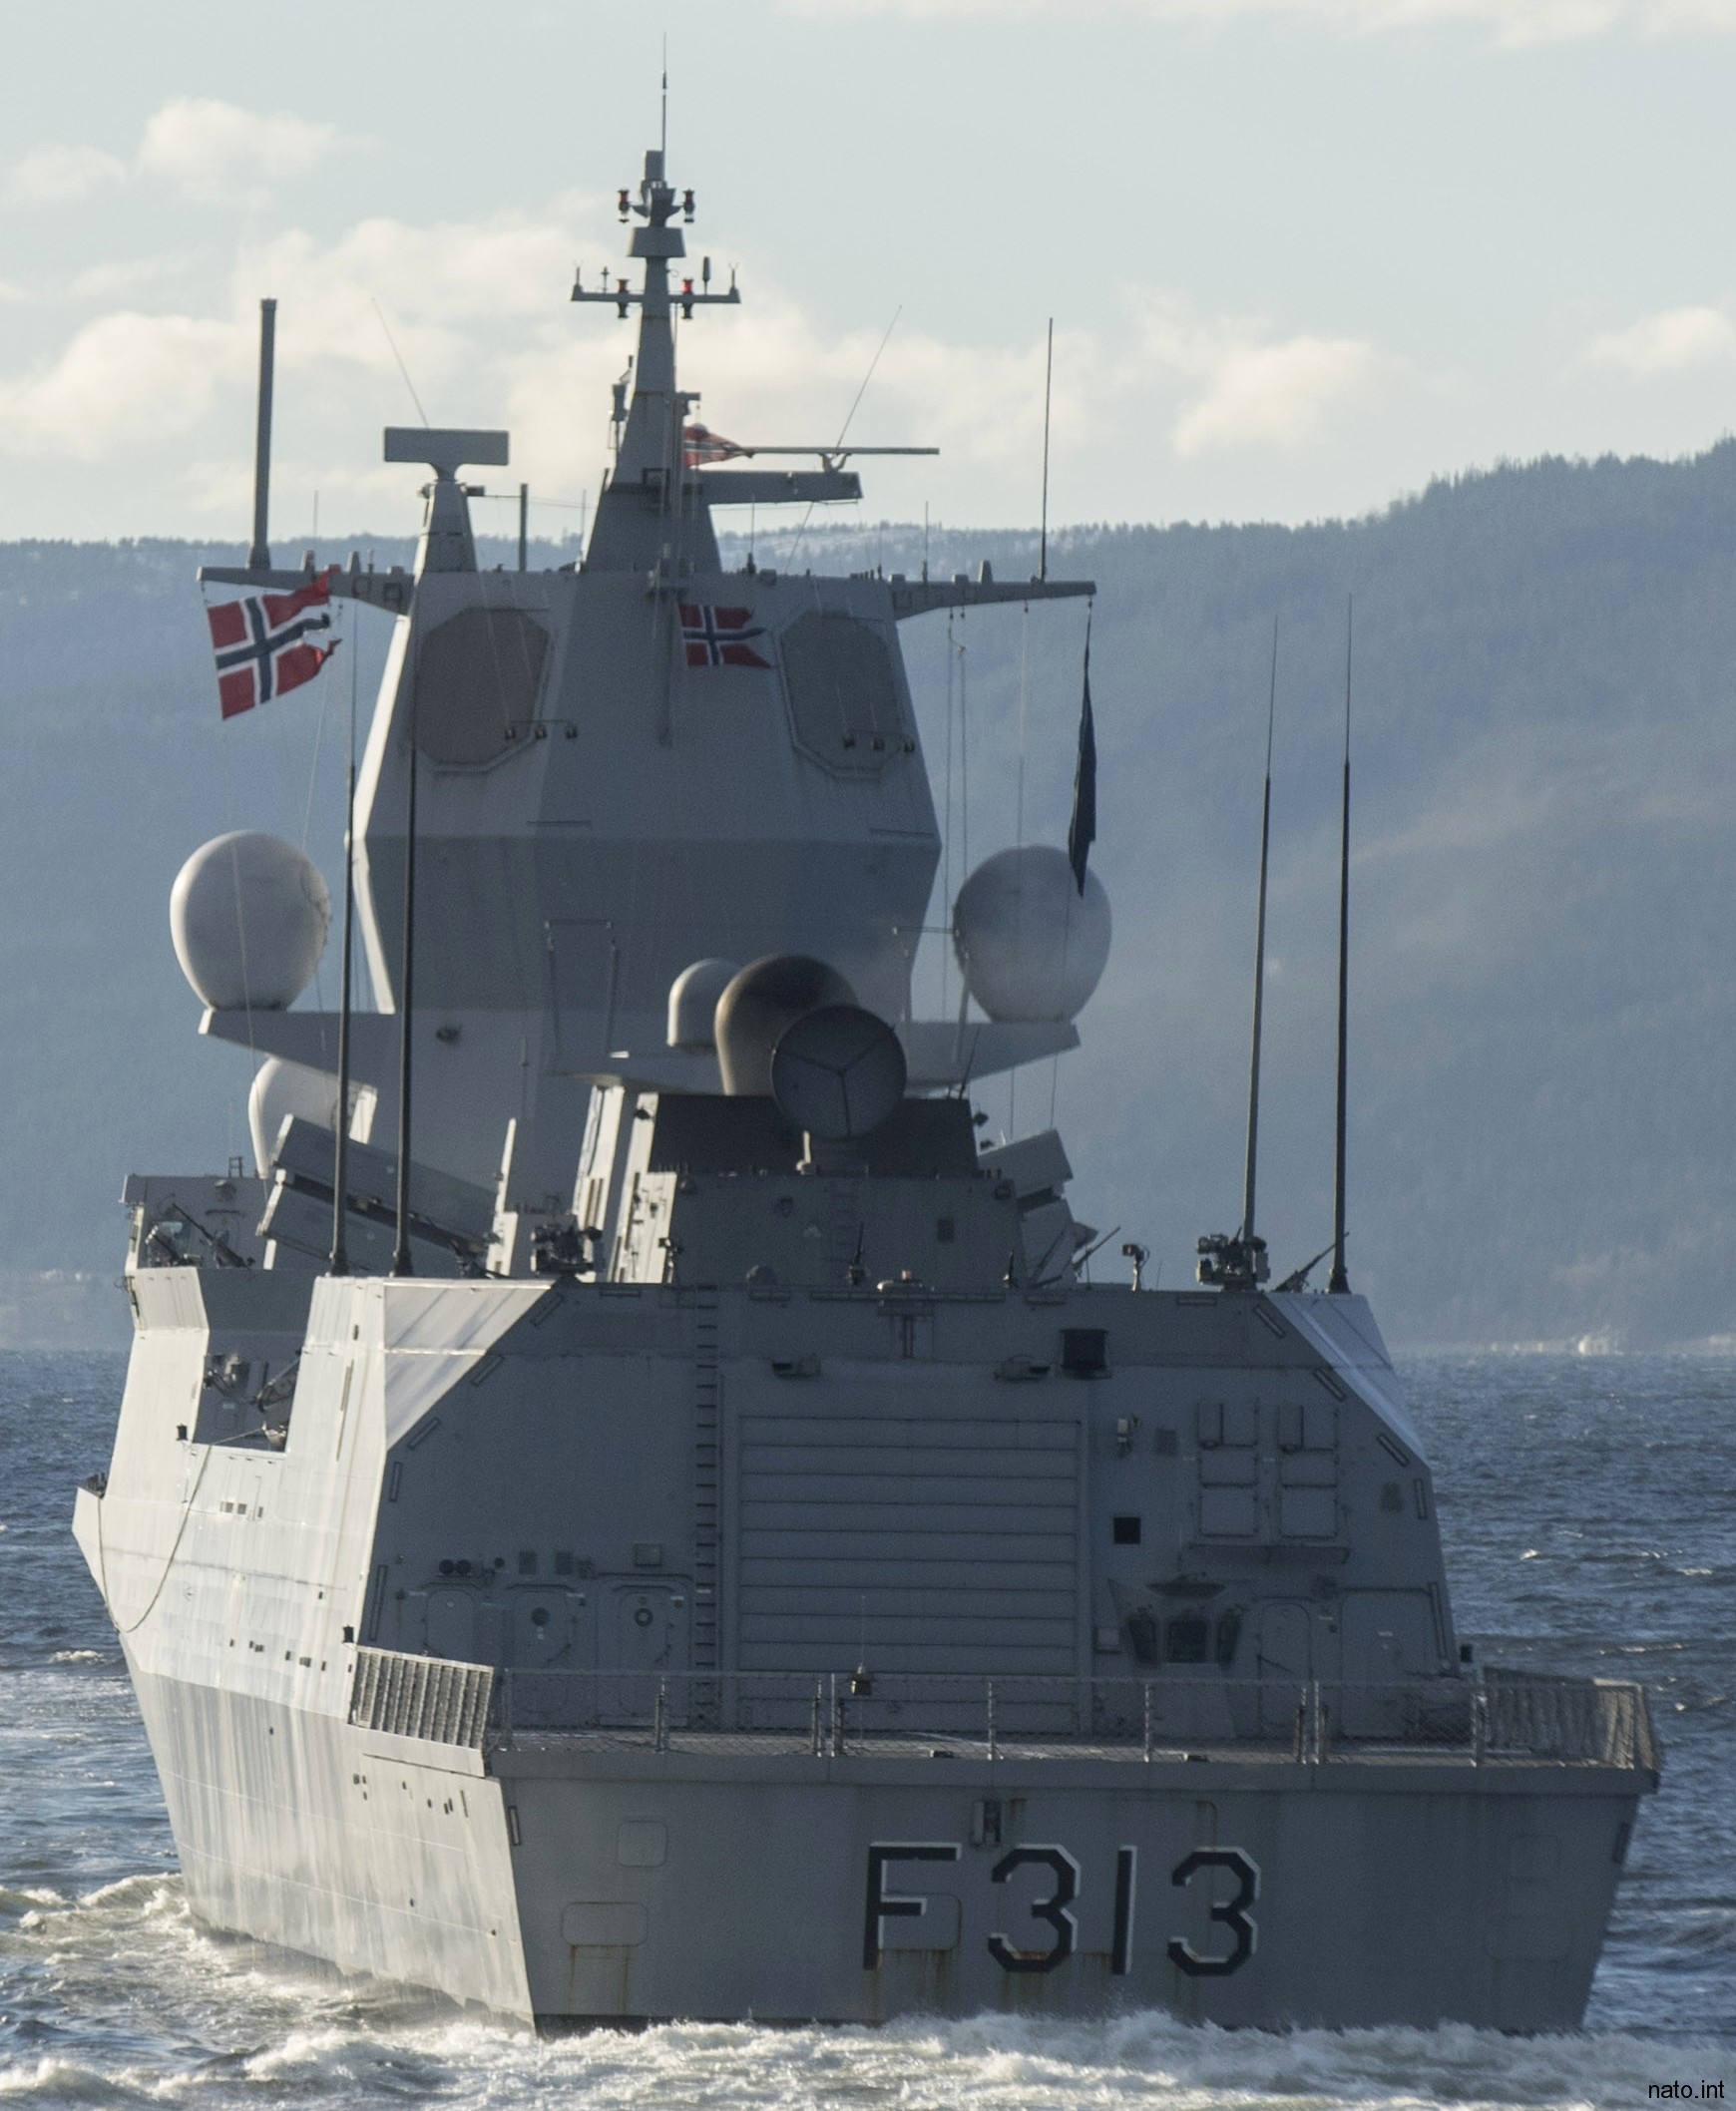 f-313 helge ingstad hnoms knm nansen class frigate royal norwegian navy 39 flight deck hangar nh-90